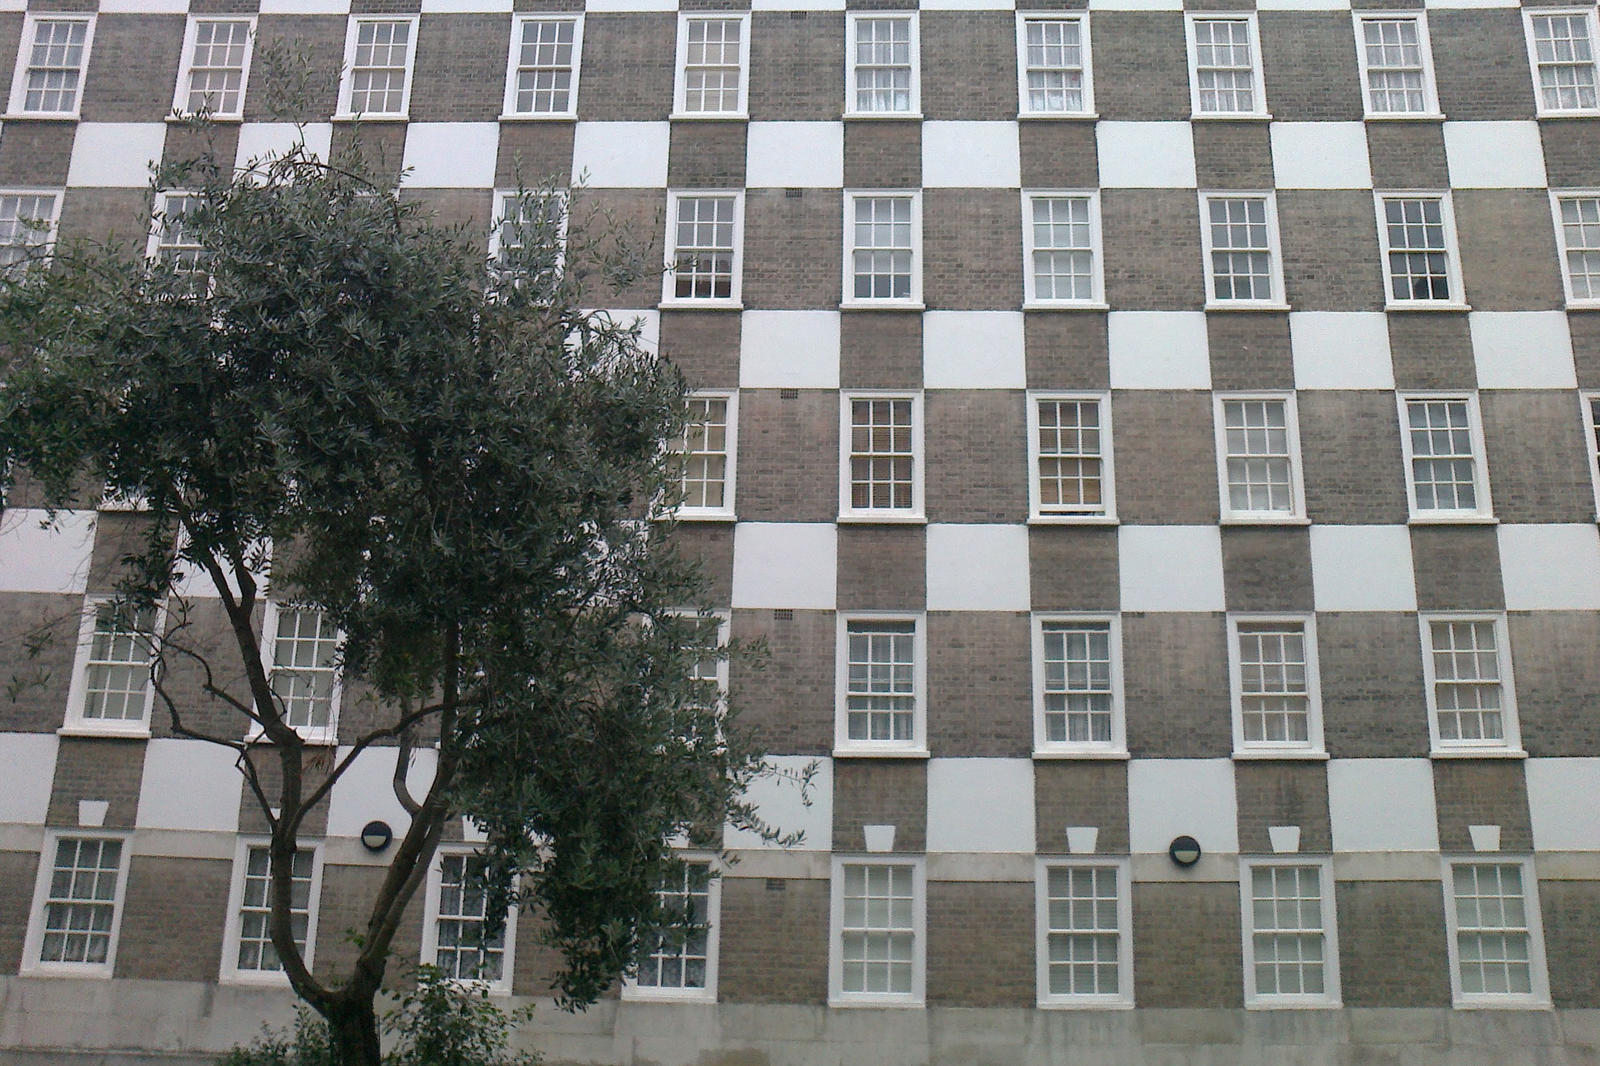 London 2013, page street housing by Sir Edwin Lutyens